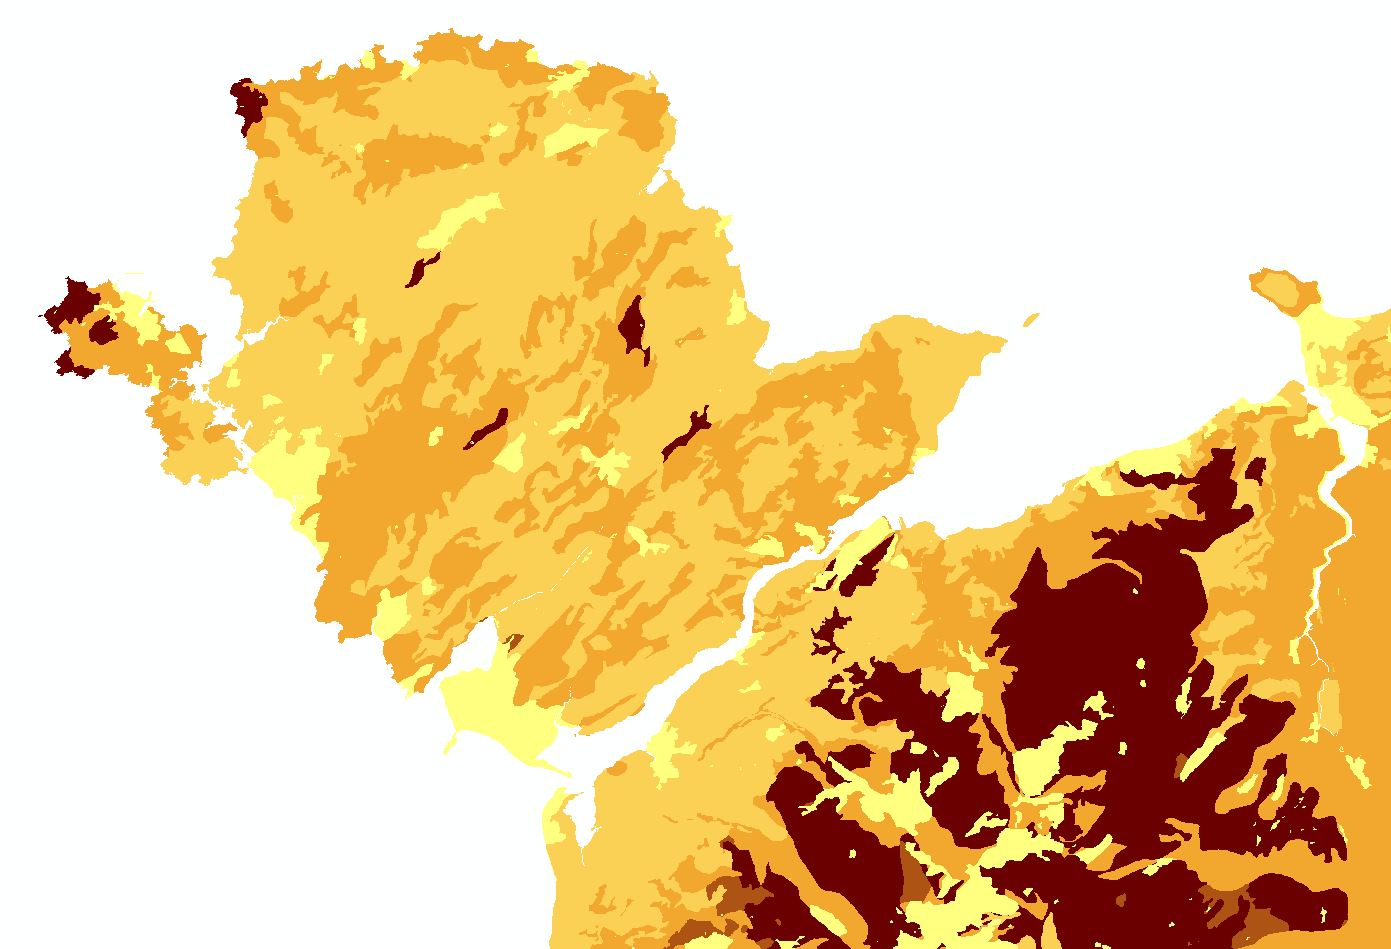 NATMAPcarbon dataset shown for Anglesey